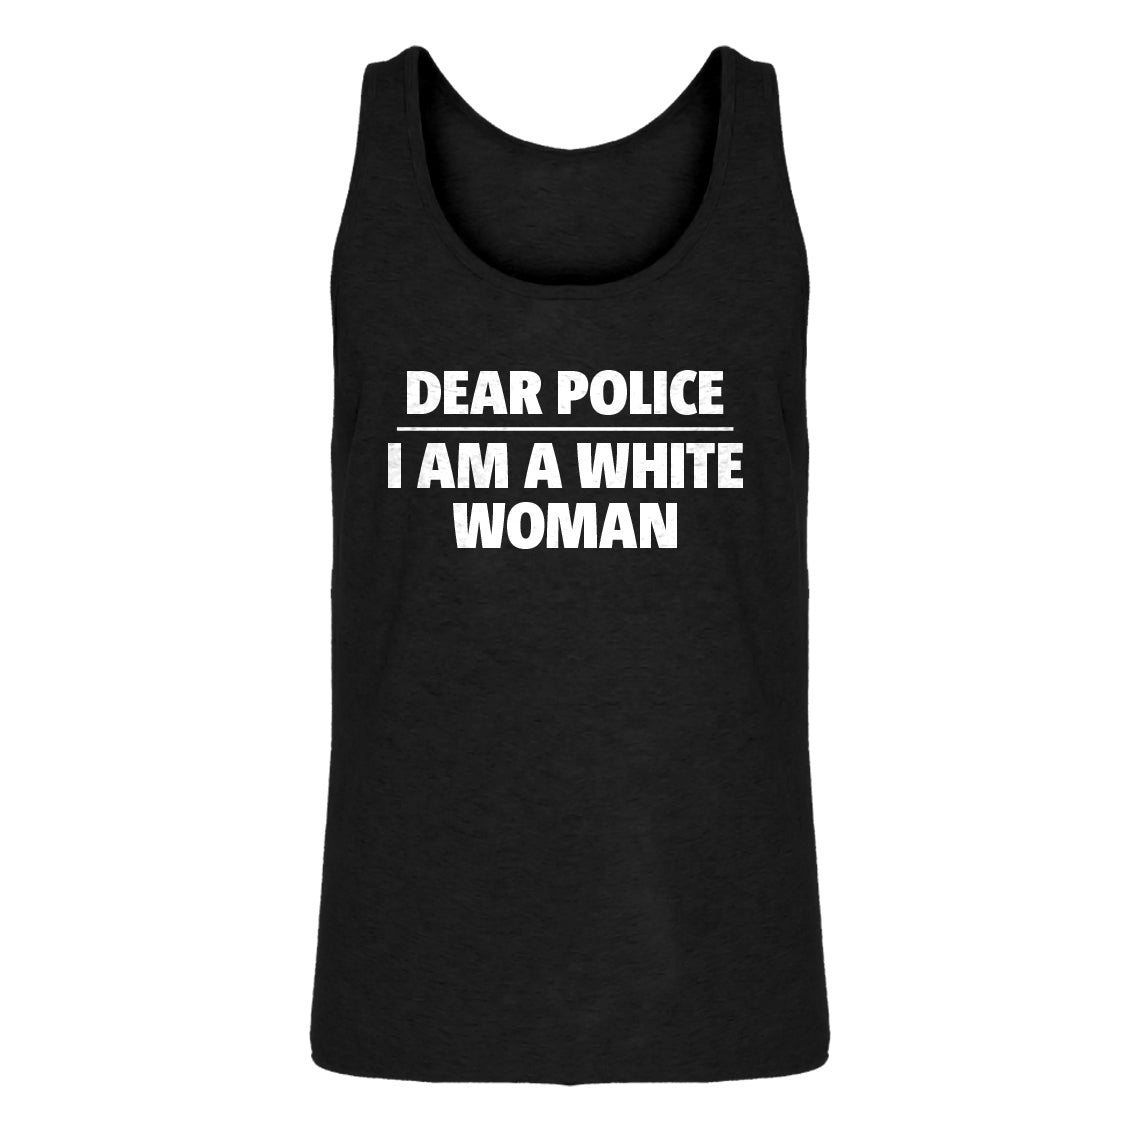 Mens Dear Police: I am a white woman. Jersey Tank Top